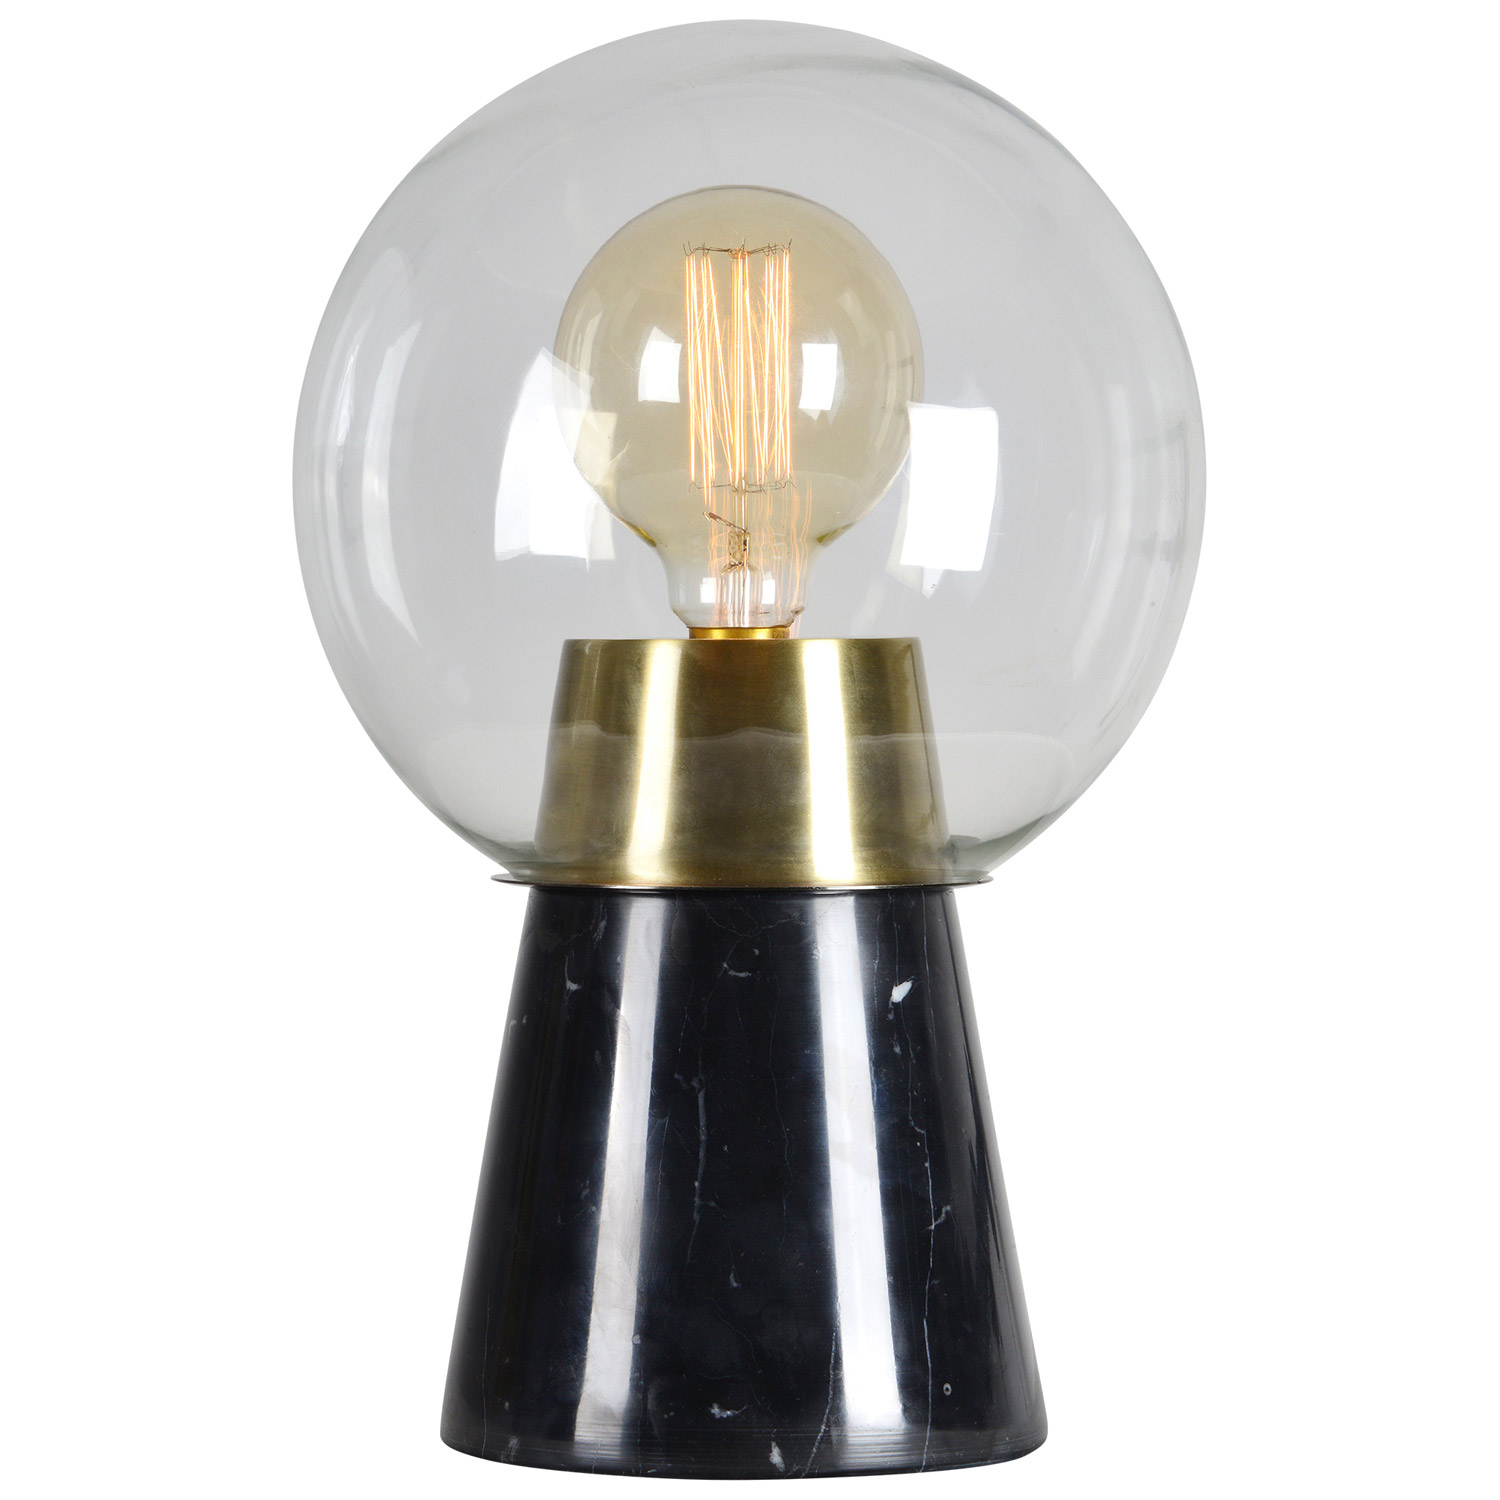 Ren-Wil Oswald Table Lamp - Antique Brass/Black